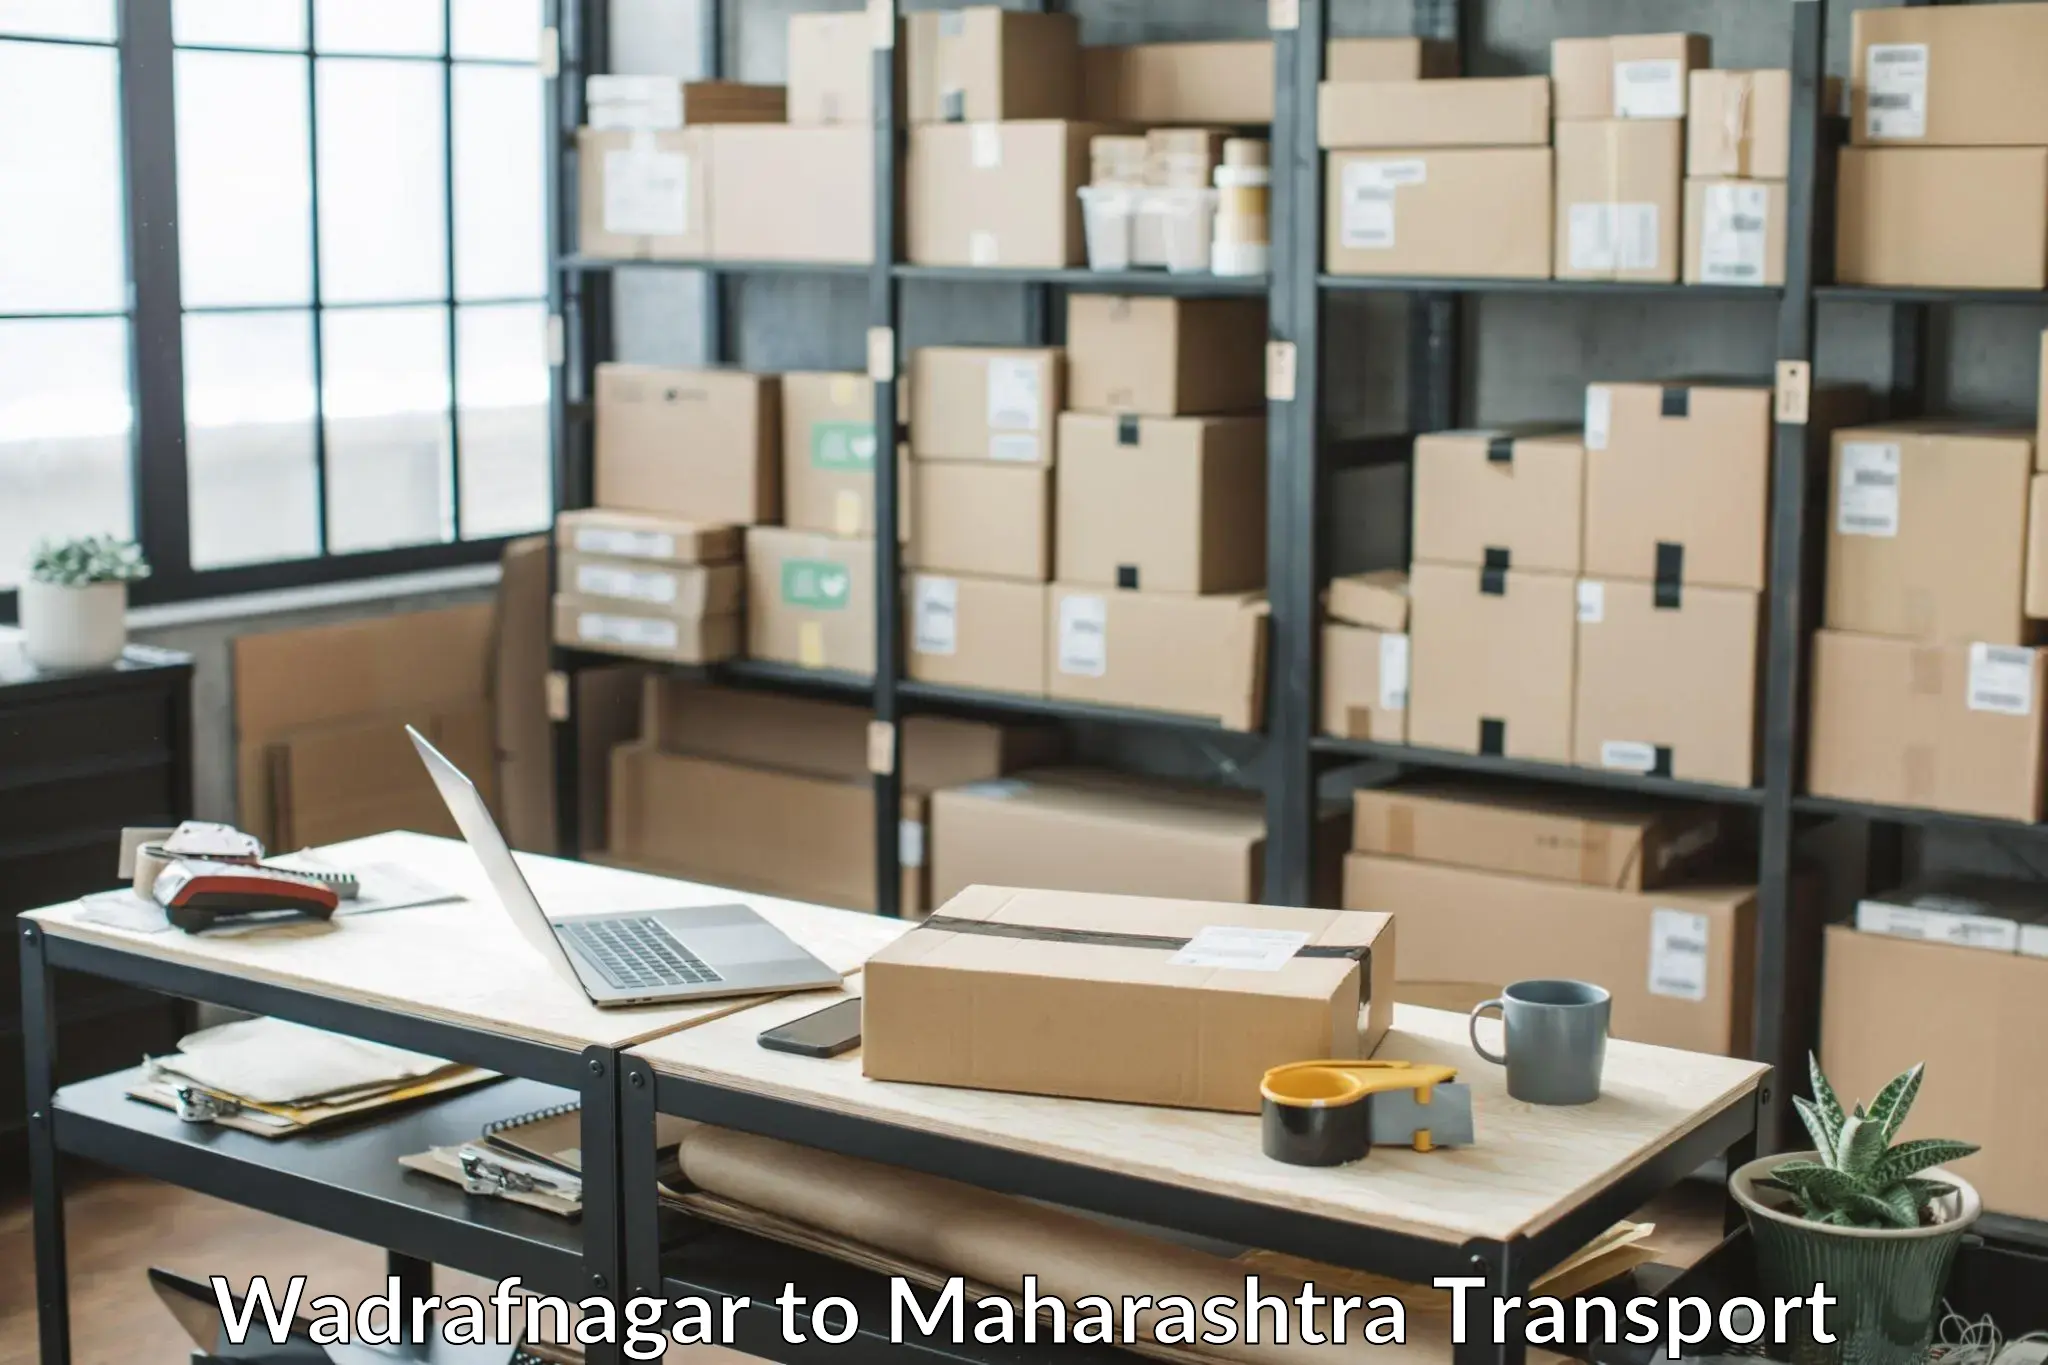 Container transport service Wadrafnagar to Mul